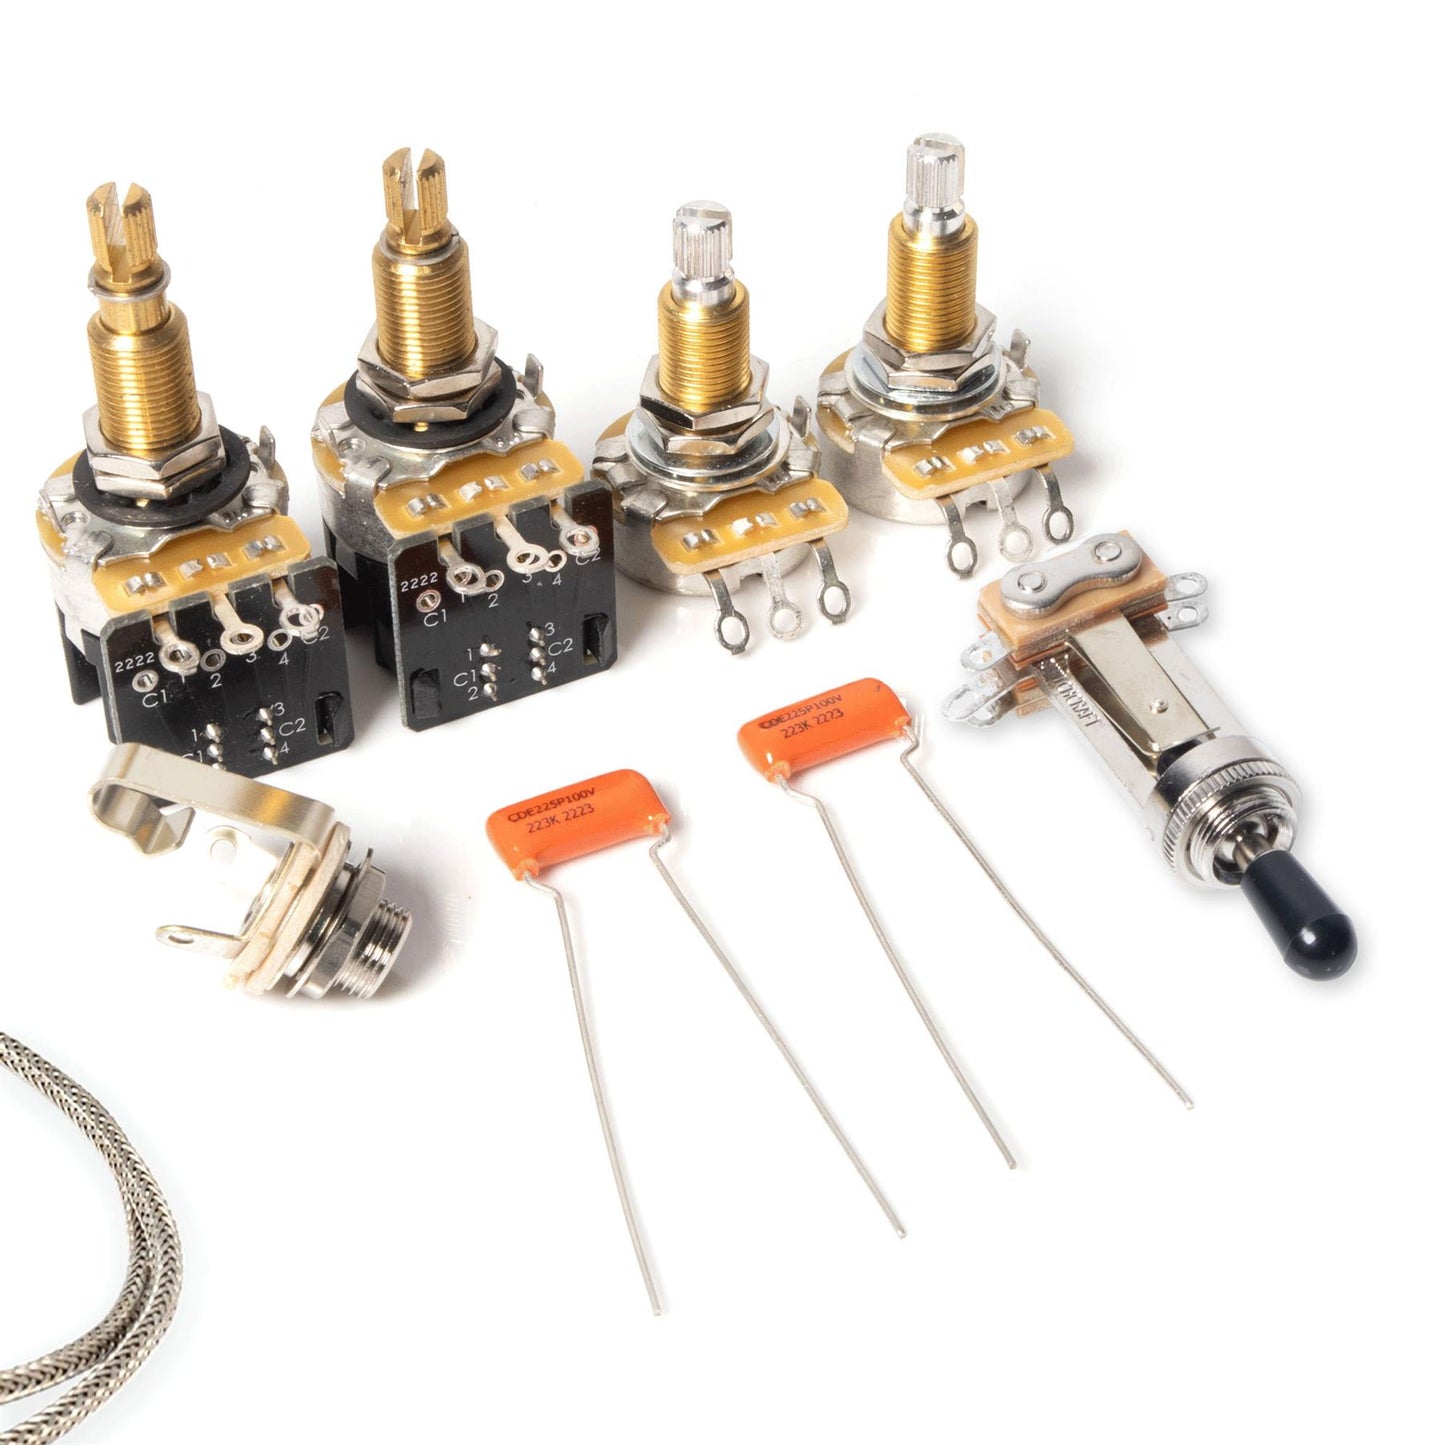 Les Paul Coil Split Wiring Kit - Switchcraft Toggle, Orange Drop Caps